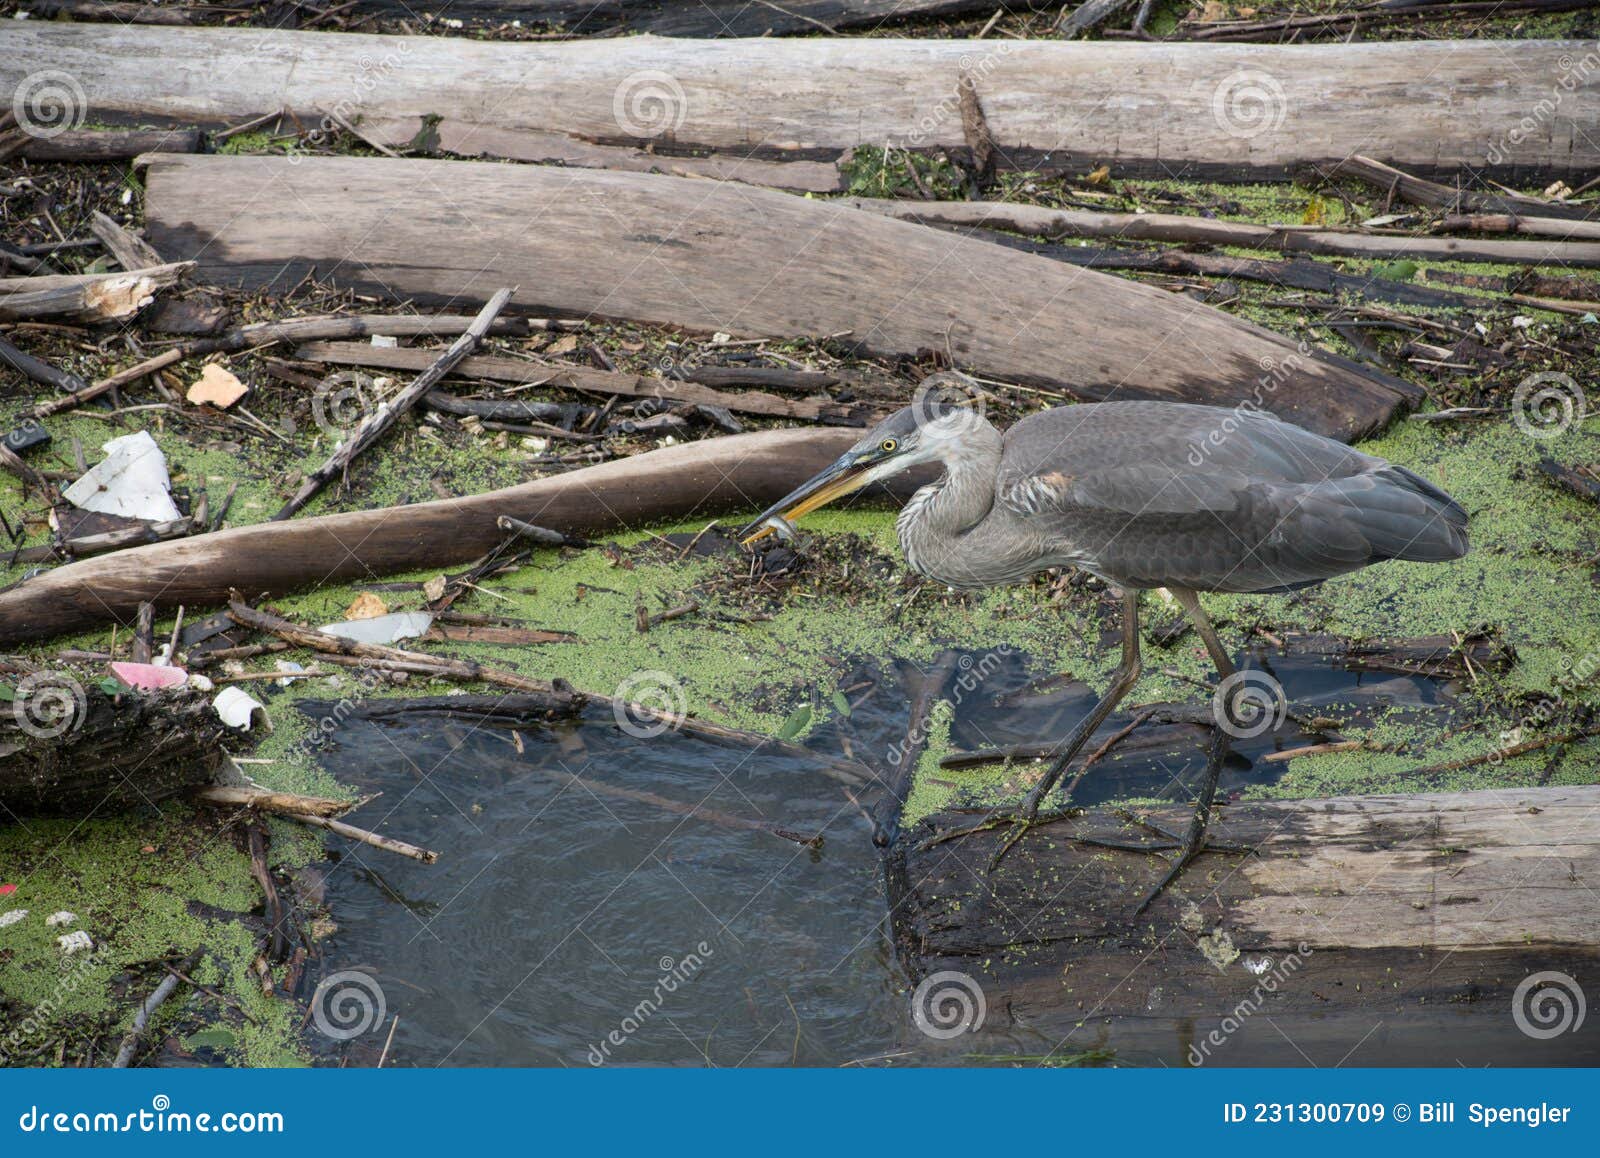 heron catches a perch